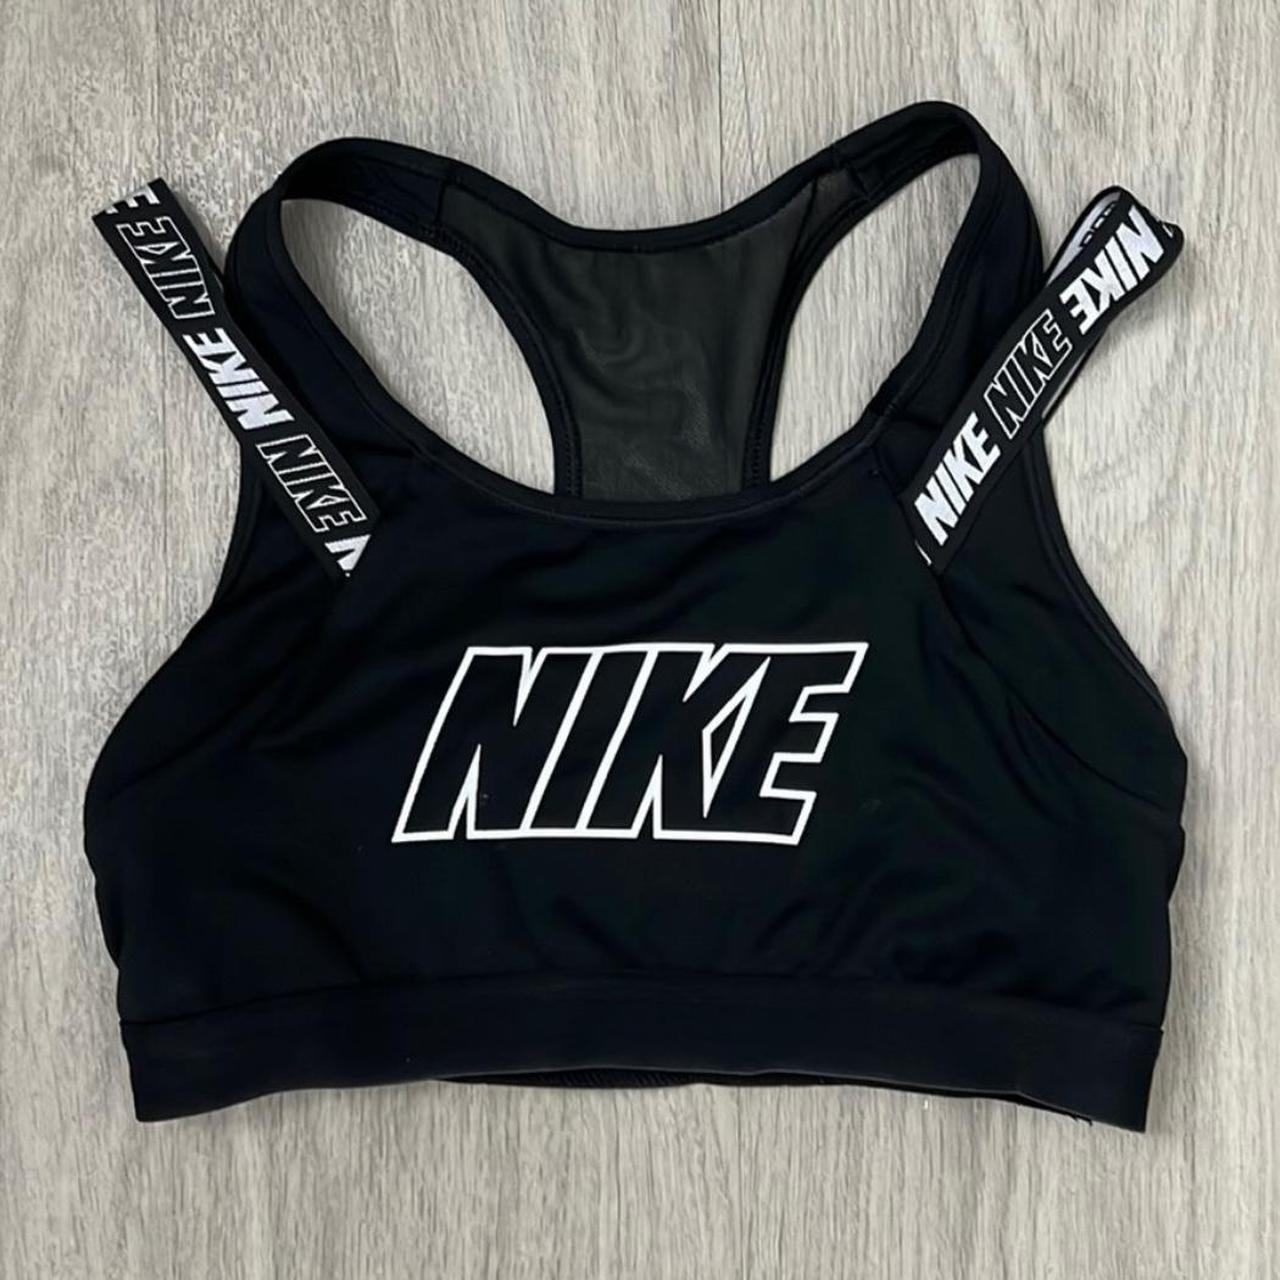 Nike black and neon pattern Sports Bra Good - Depop